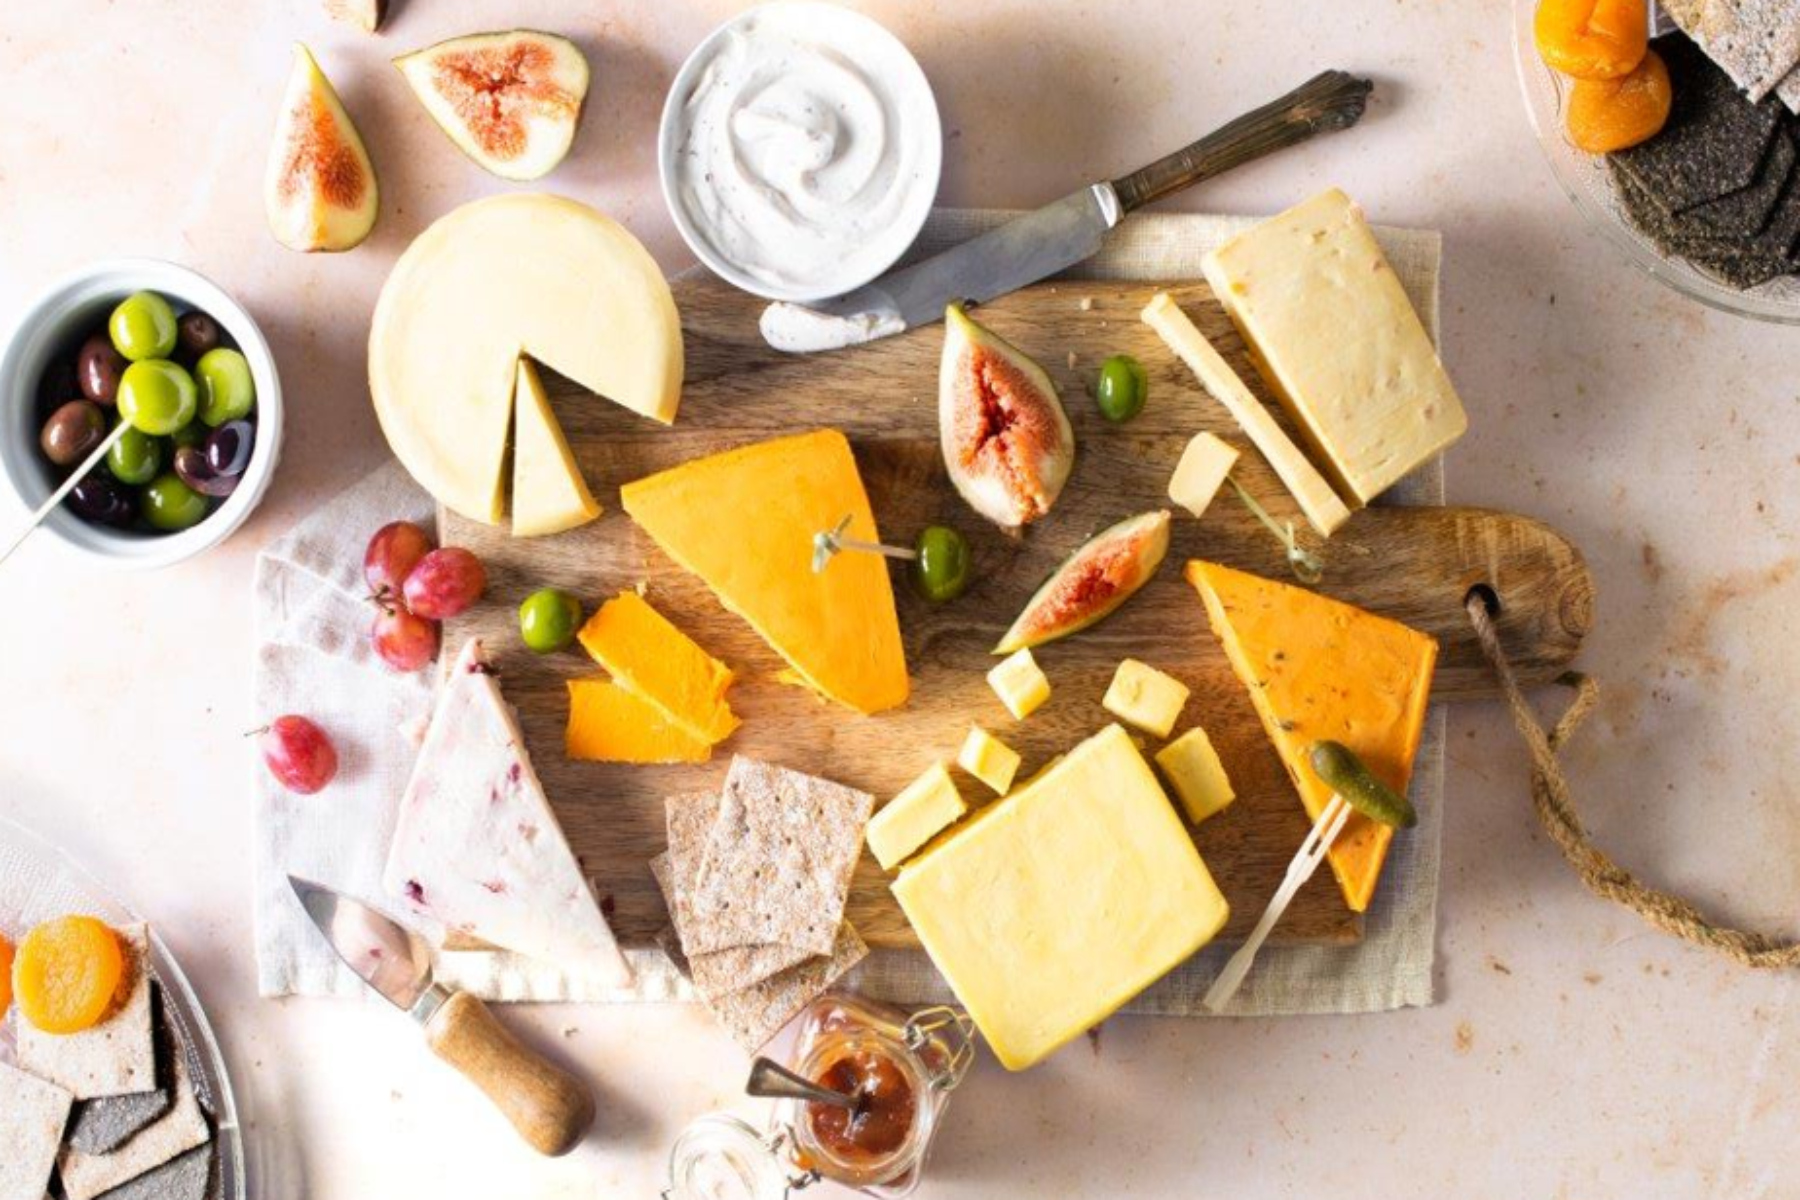 Vegan τυρί: Πώς δημιουργείται το vegan τυρί;